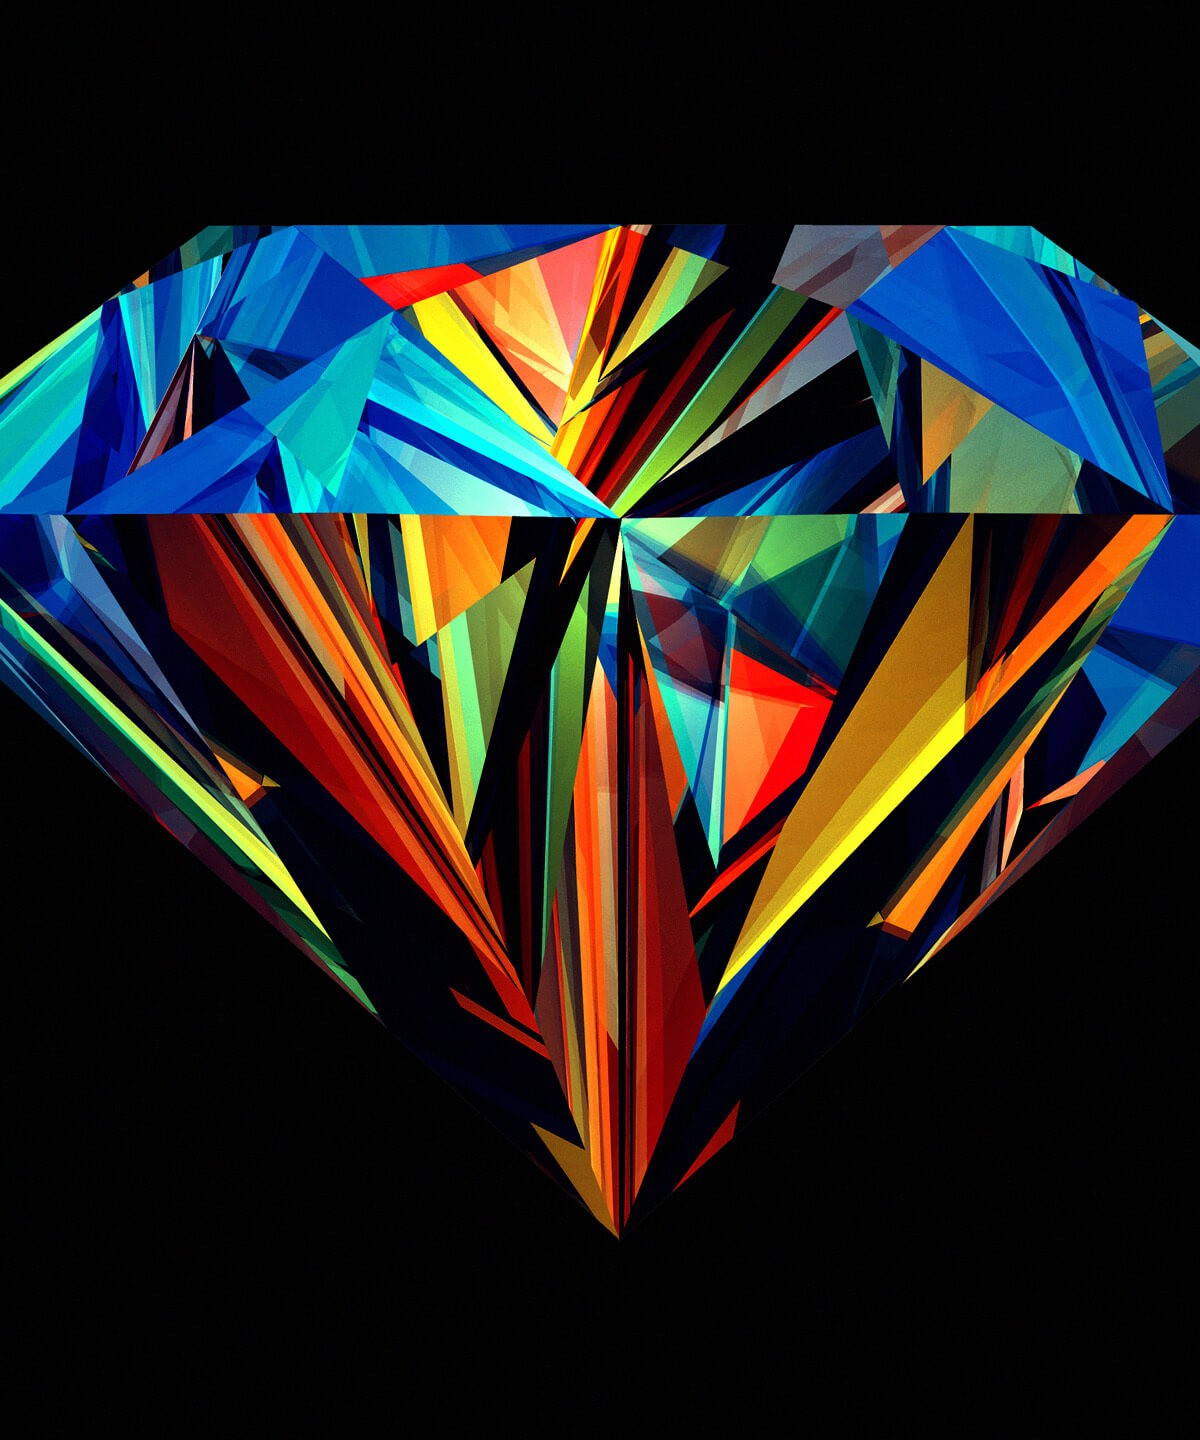 Colorful Diamond HD Wallpaper For Kindle Fire HDx HDwallpaper